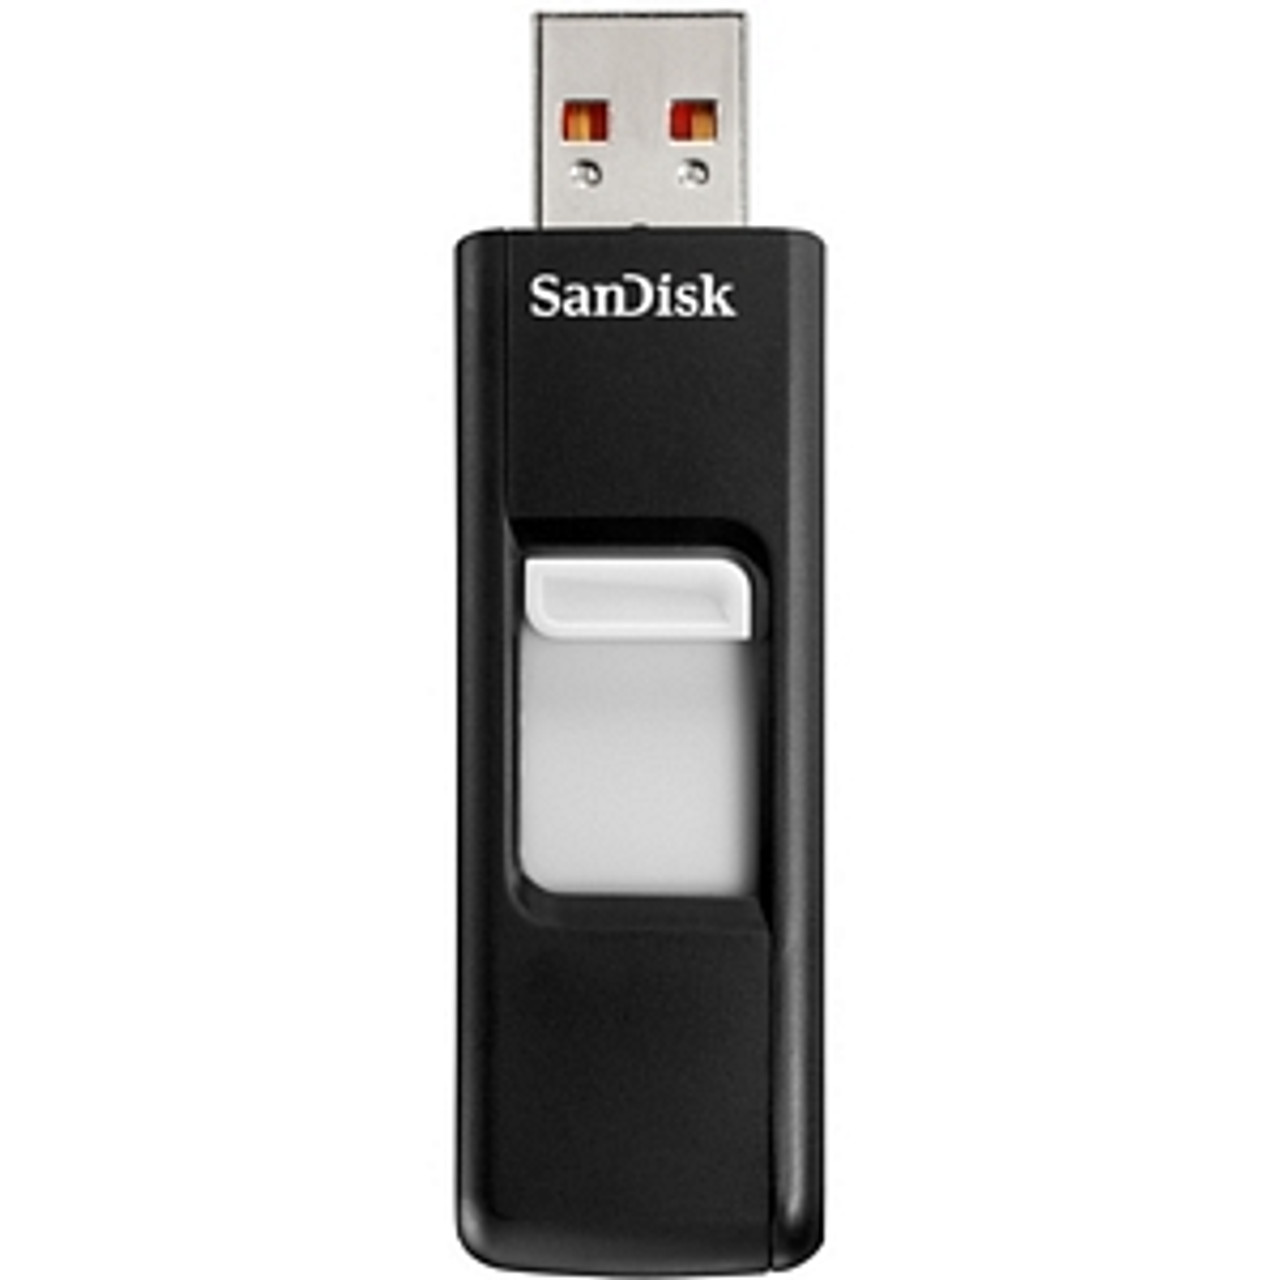 SDCZ36-016G-P36 - SanDisk Cruzer SDCZ36-016G-P36 16 GB USB 2.0 Flash Drive - External